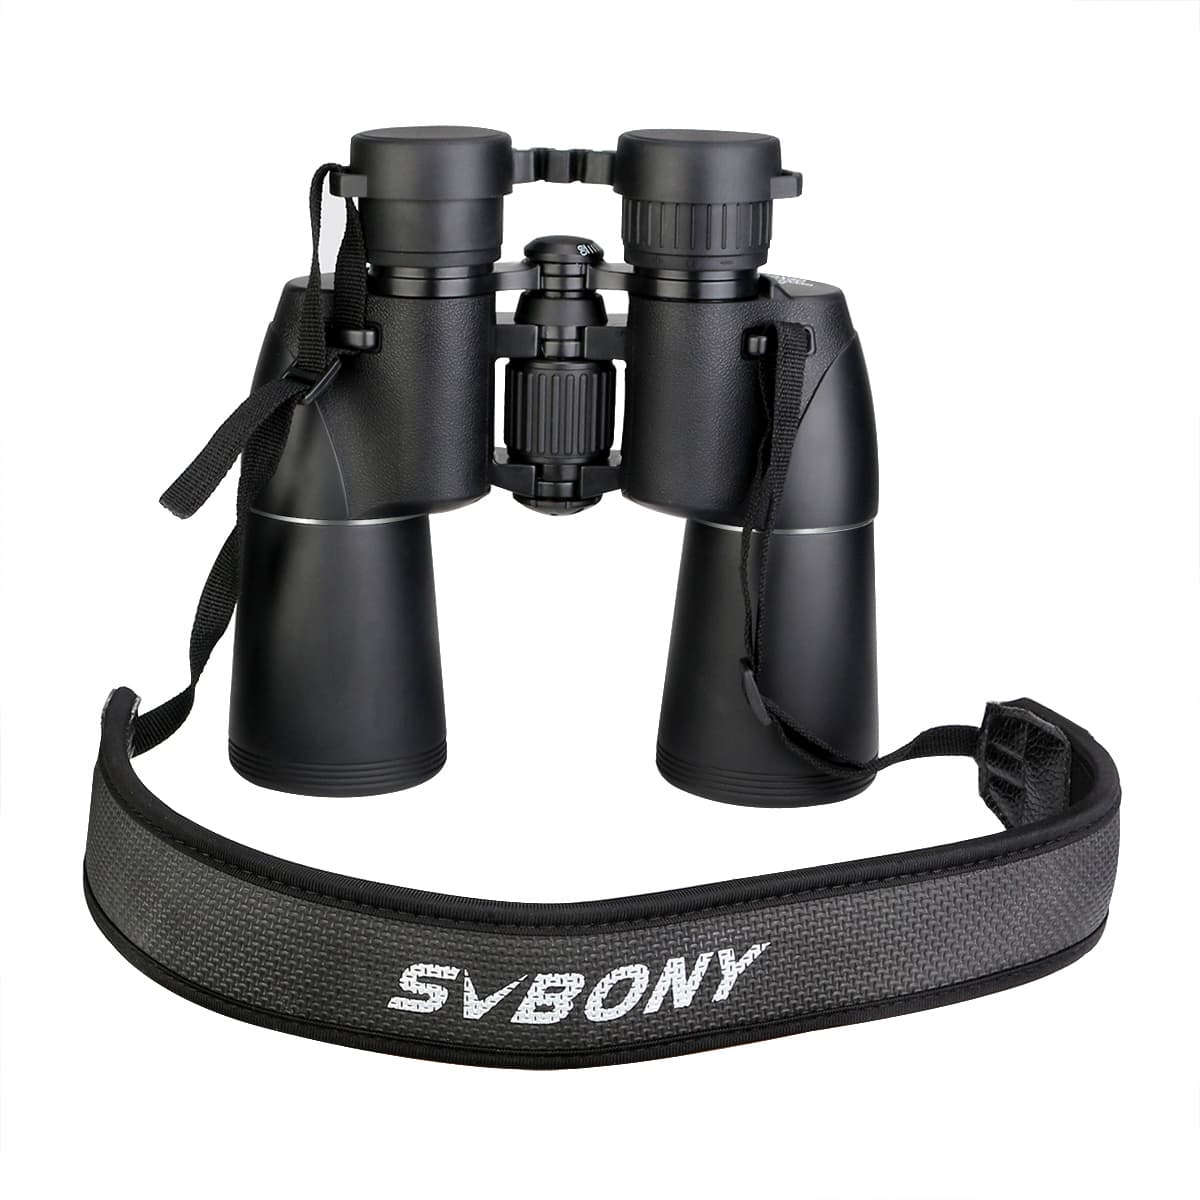 Svbony Sv6 10x50 ポロ双眼鏡 ネックストラップとソフトキャリングケース付き